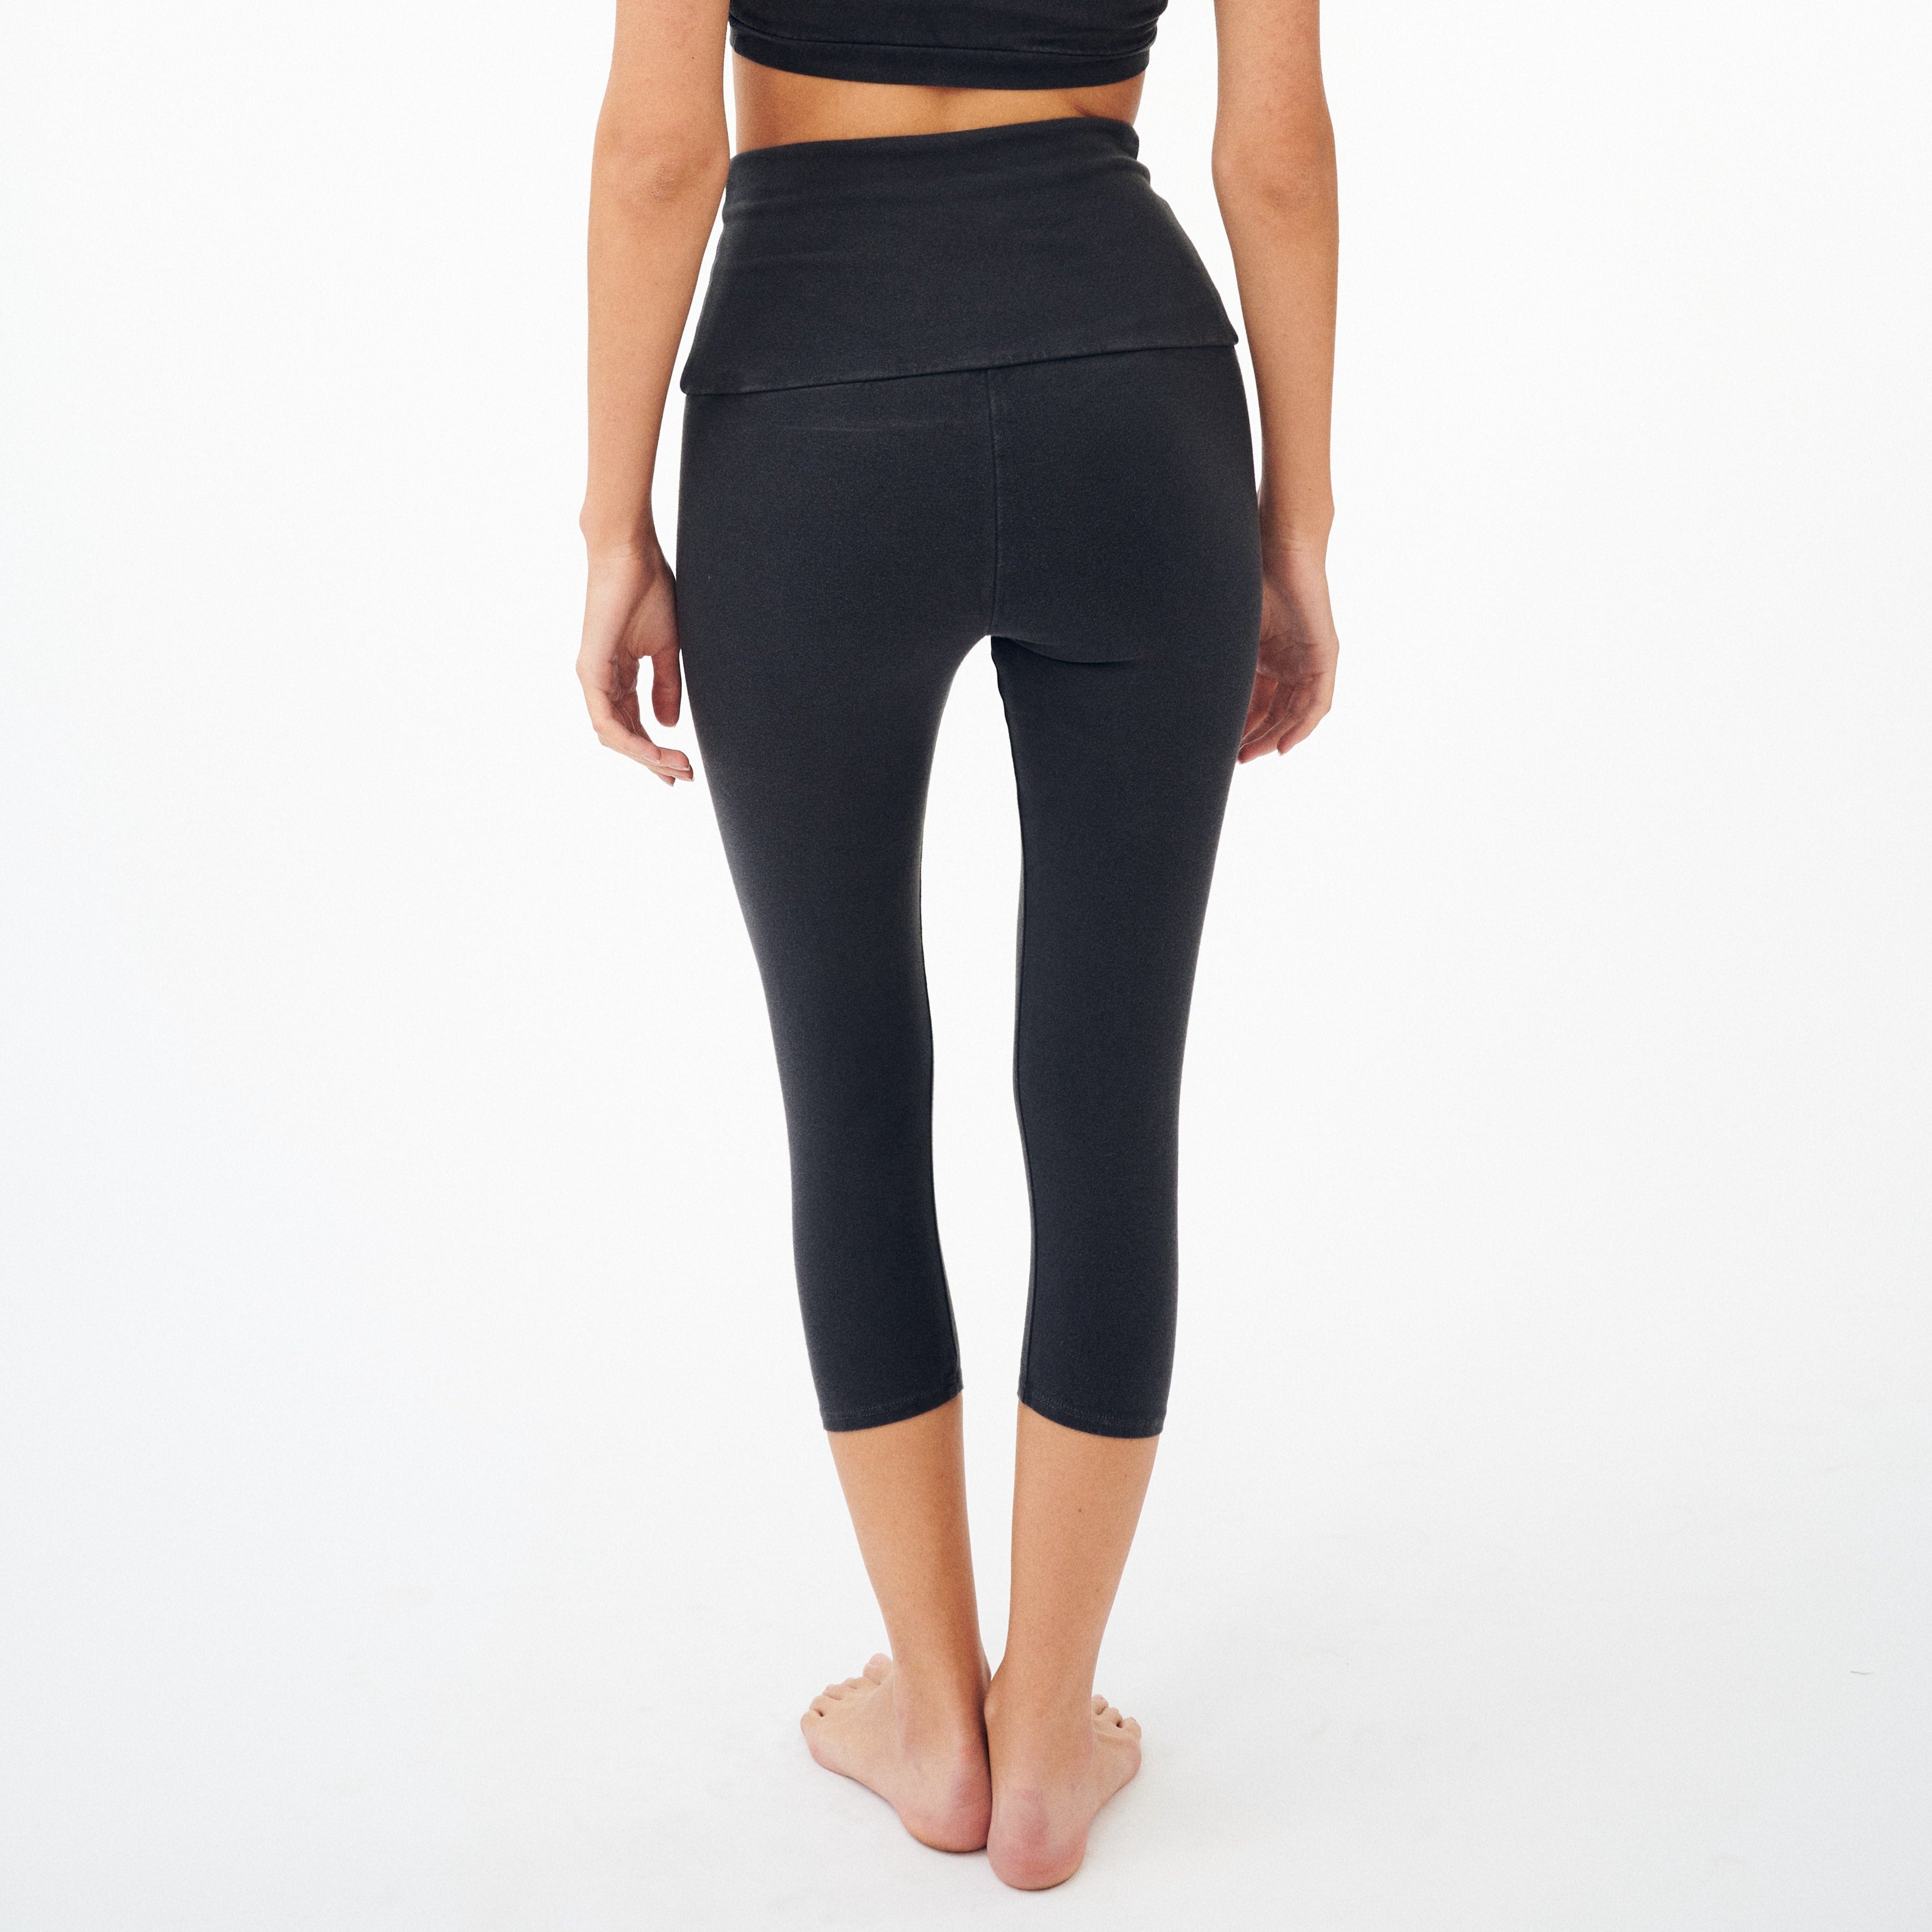 Girls Leggings Size 10/12 Large High-Rise Capri Black Activewear NWT